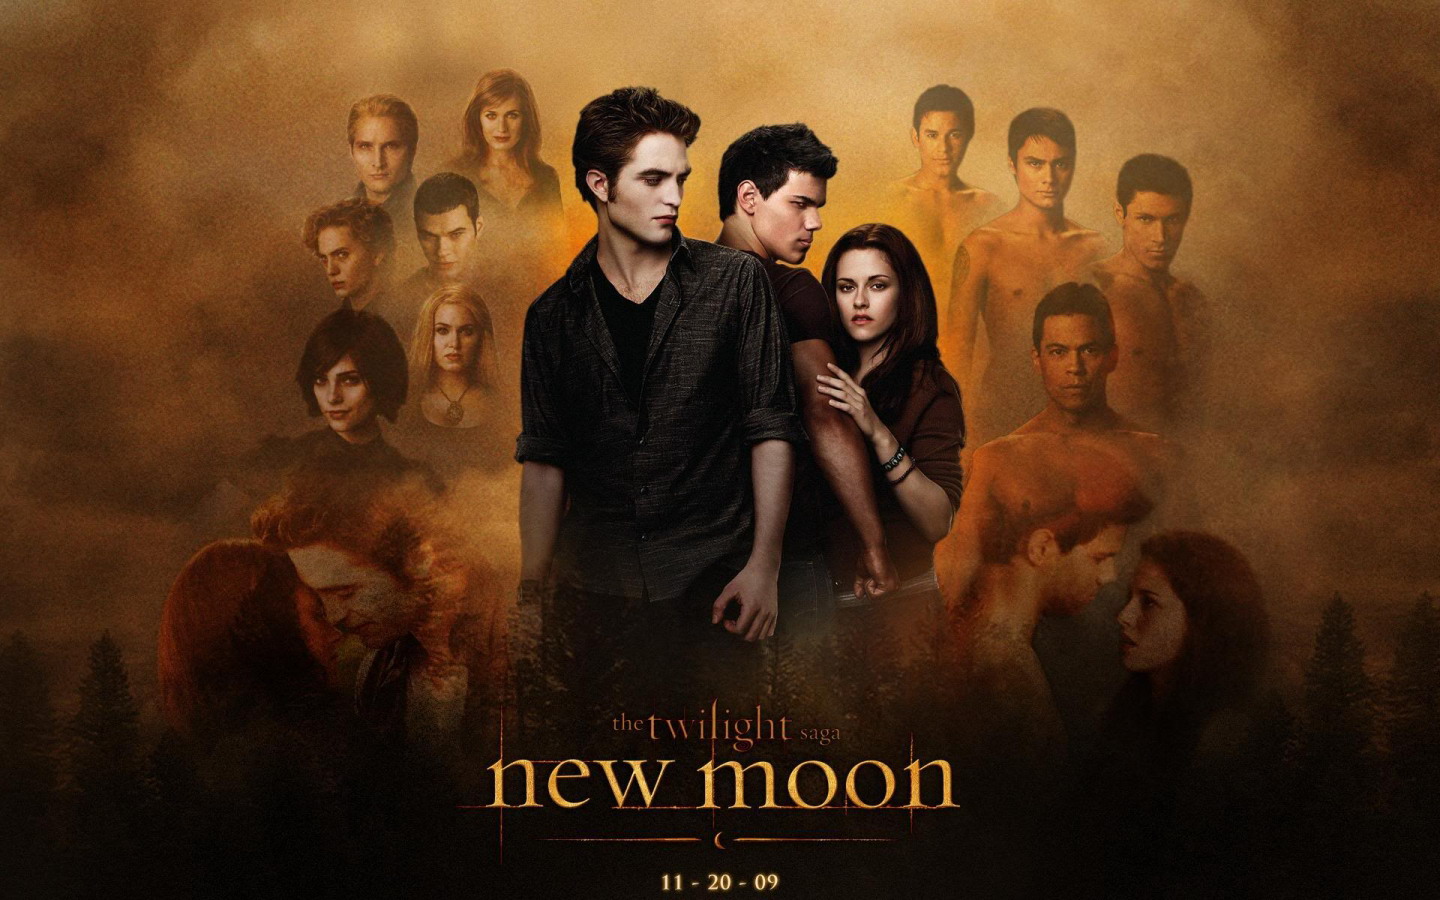 the twilight saga new moon full movie download in hindi